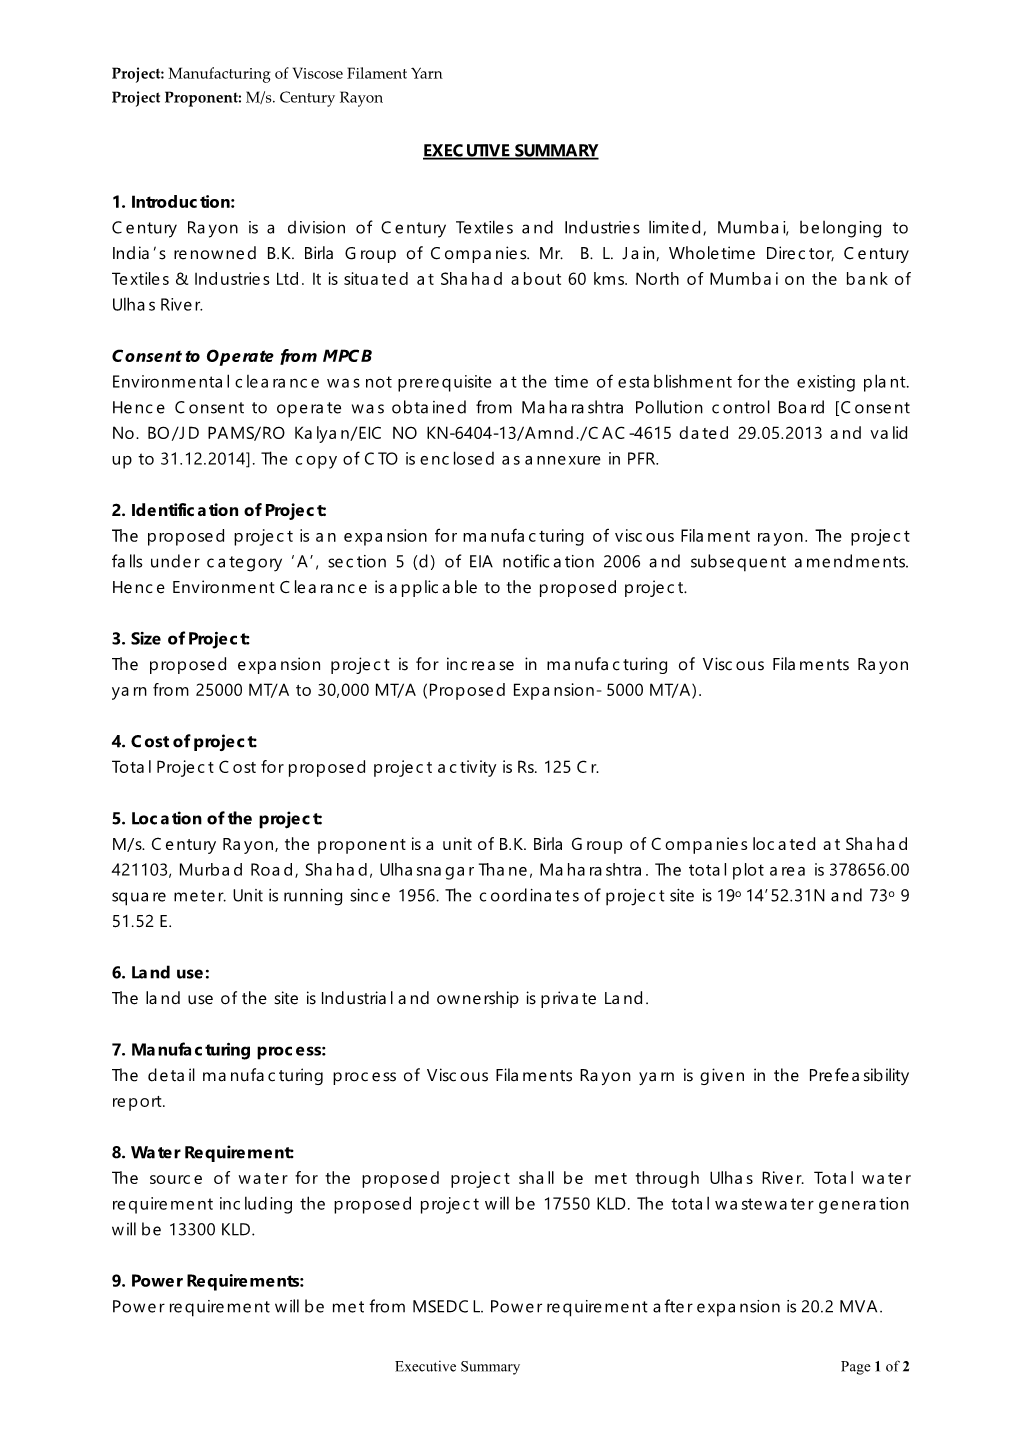 M/S. Century Rayon Executive Summary Page 1 of 2